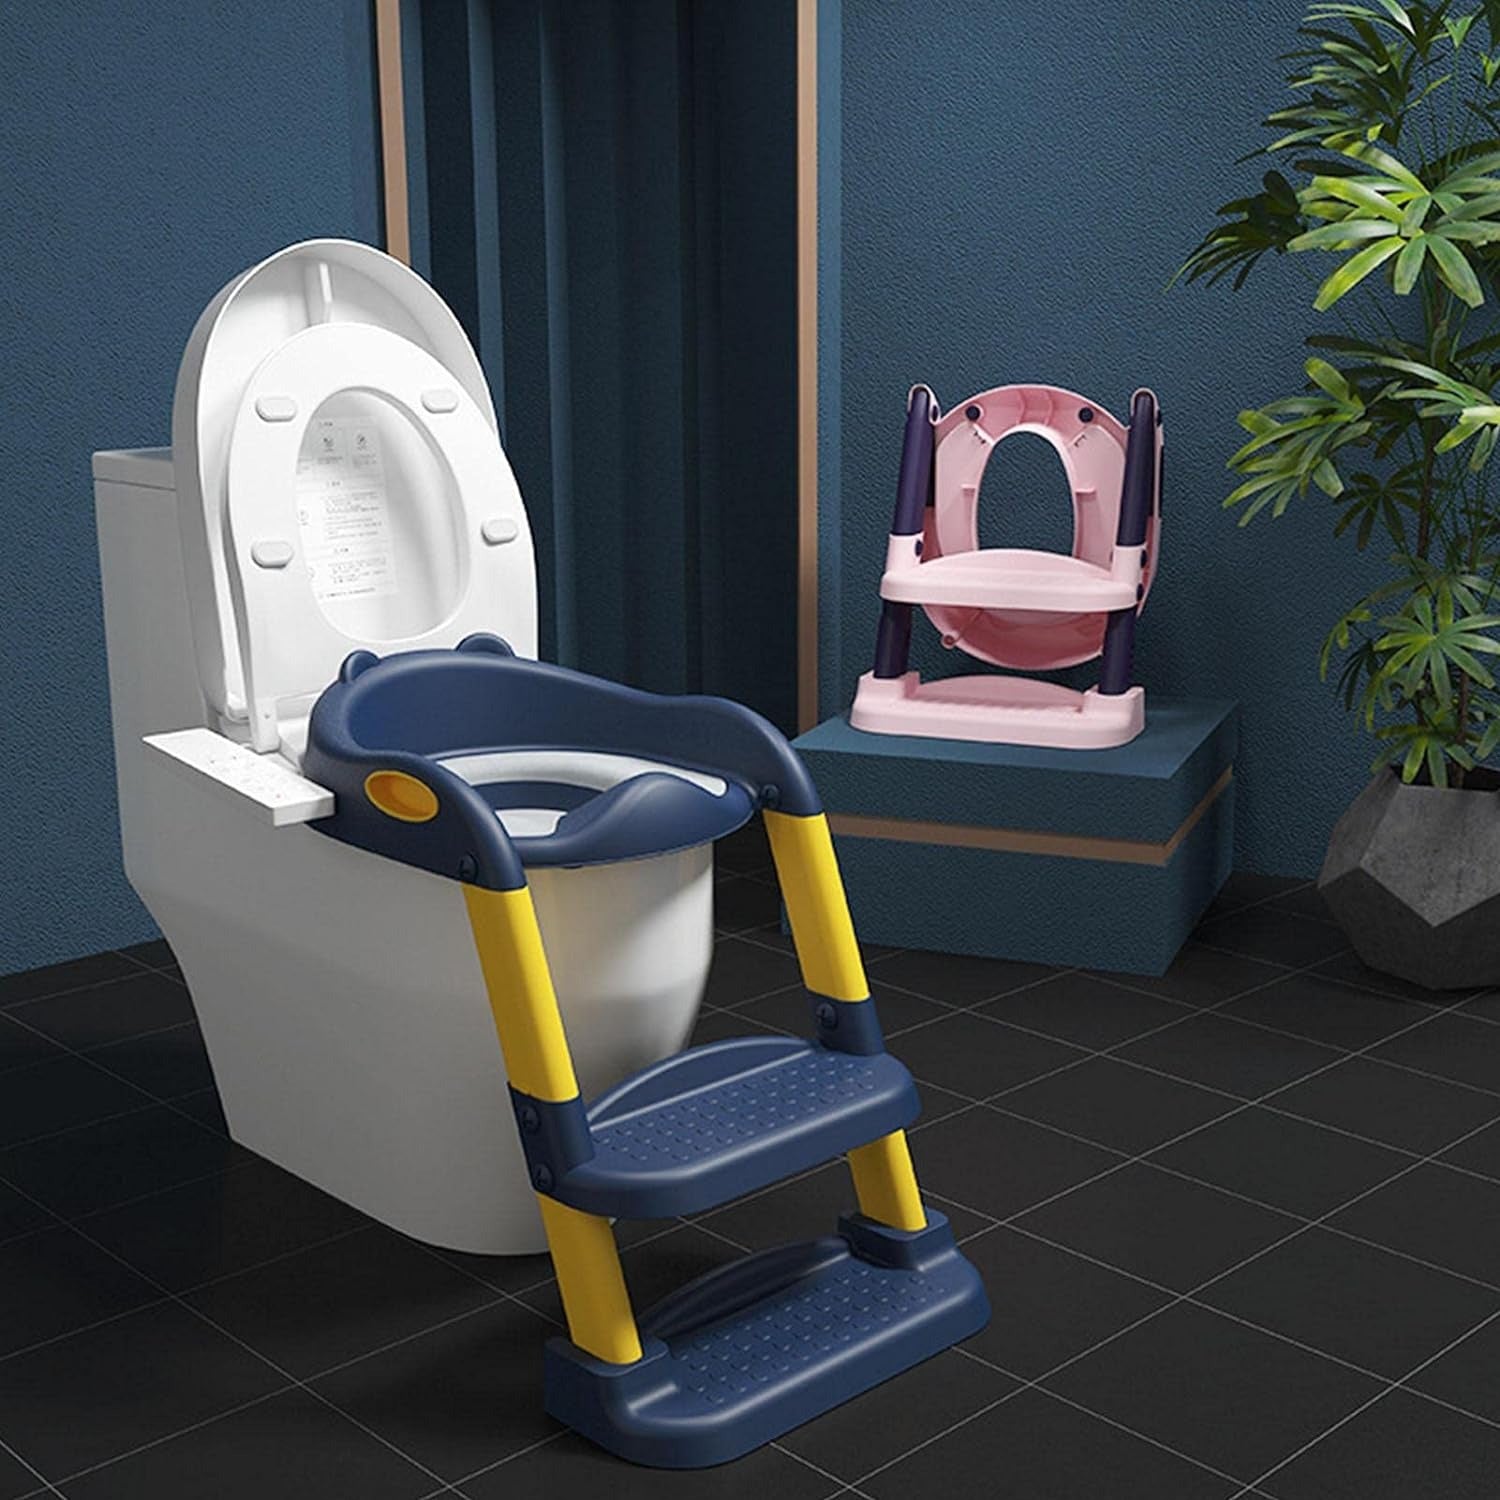 Toilet Potty Trainer Seat kept on the toilet seat